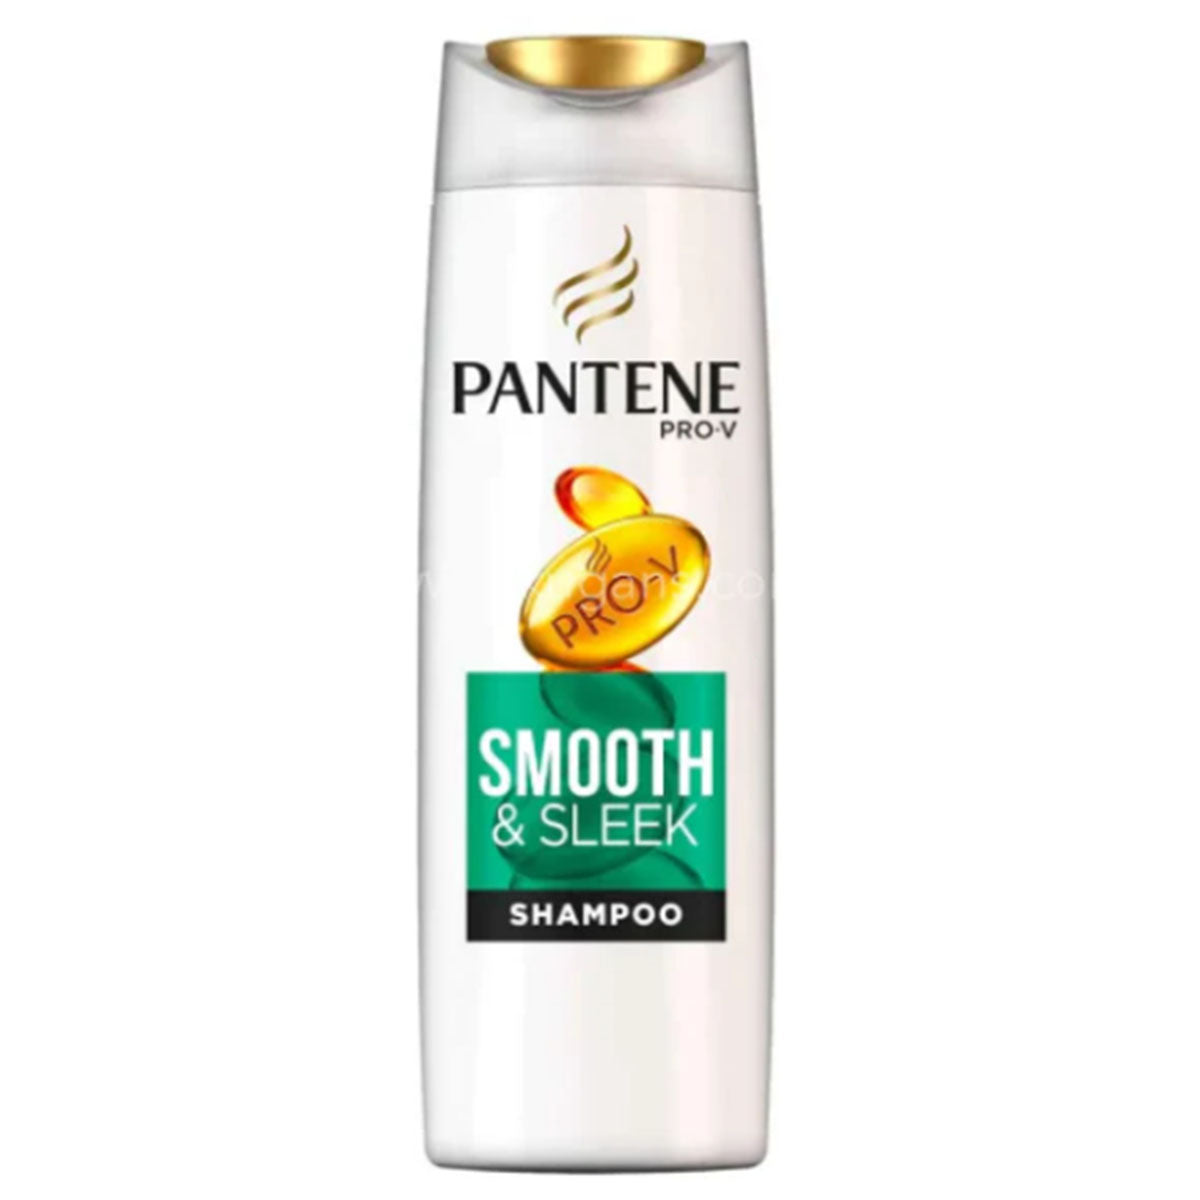 Pantene - Smooth & Sleek Shampoo - 270ml - Continental Food Store